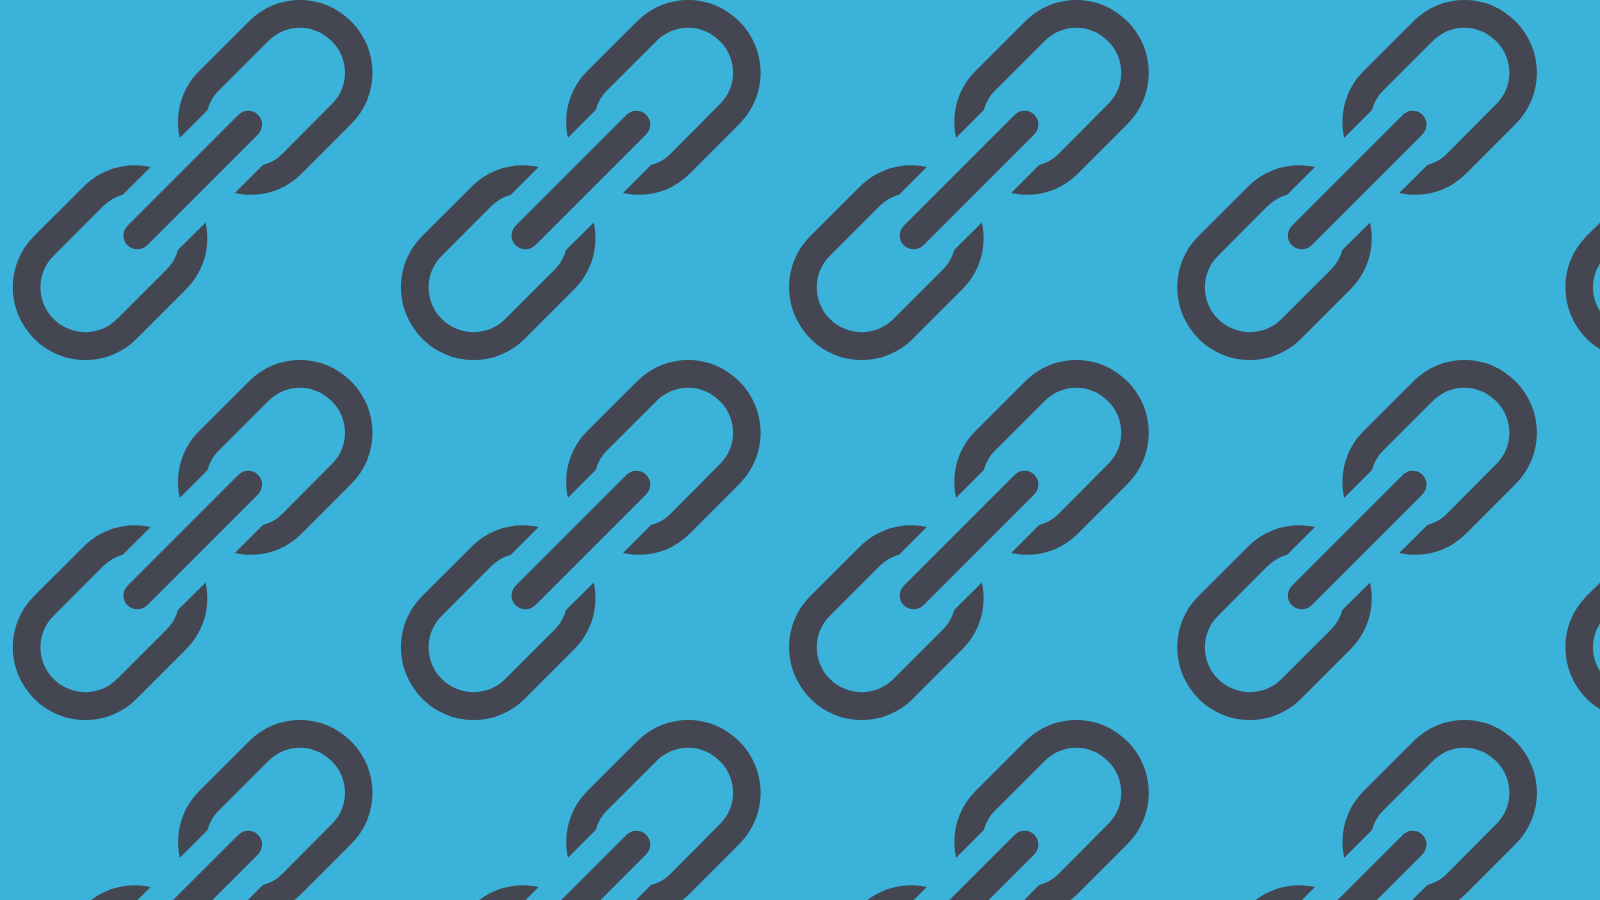 Diagonal rows of chain link symbols